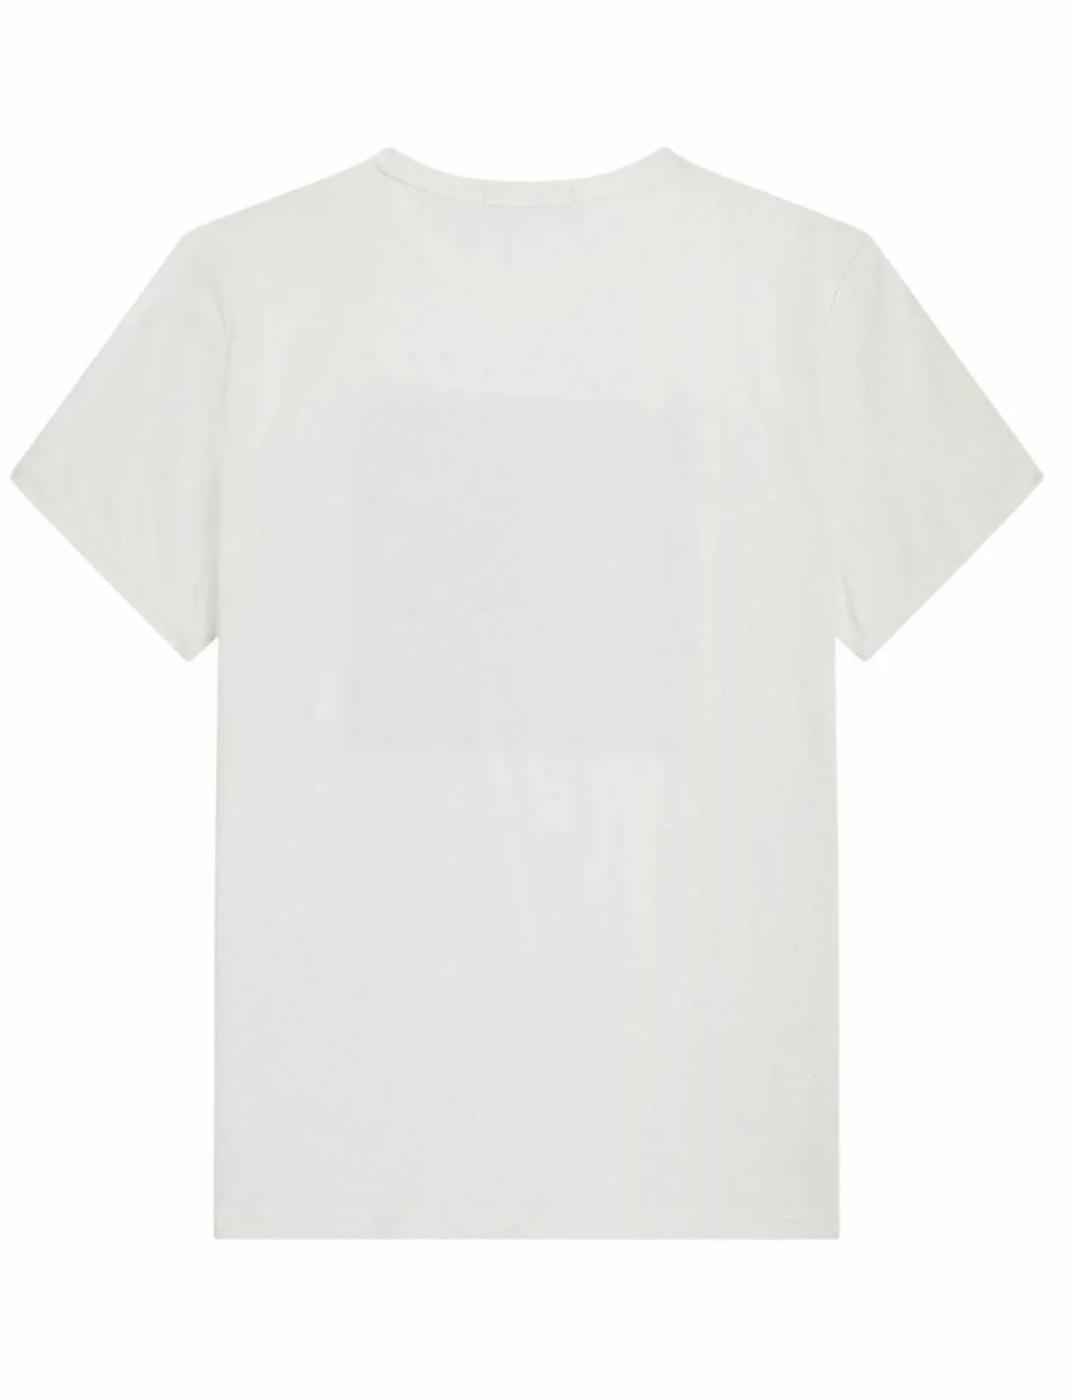 Camiseta Fred Perry blanca cuadrado negro hombre-b